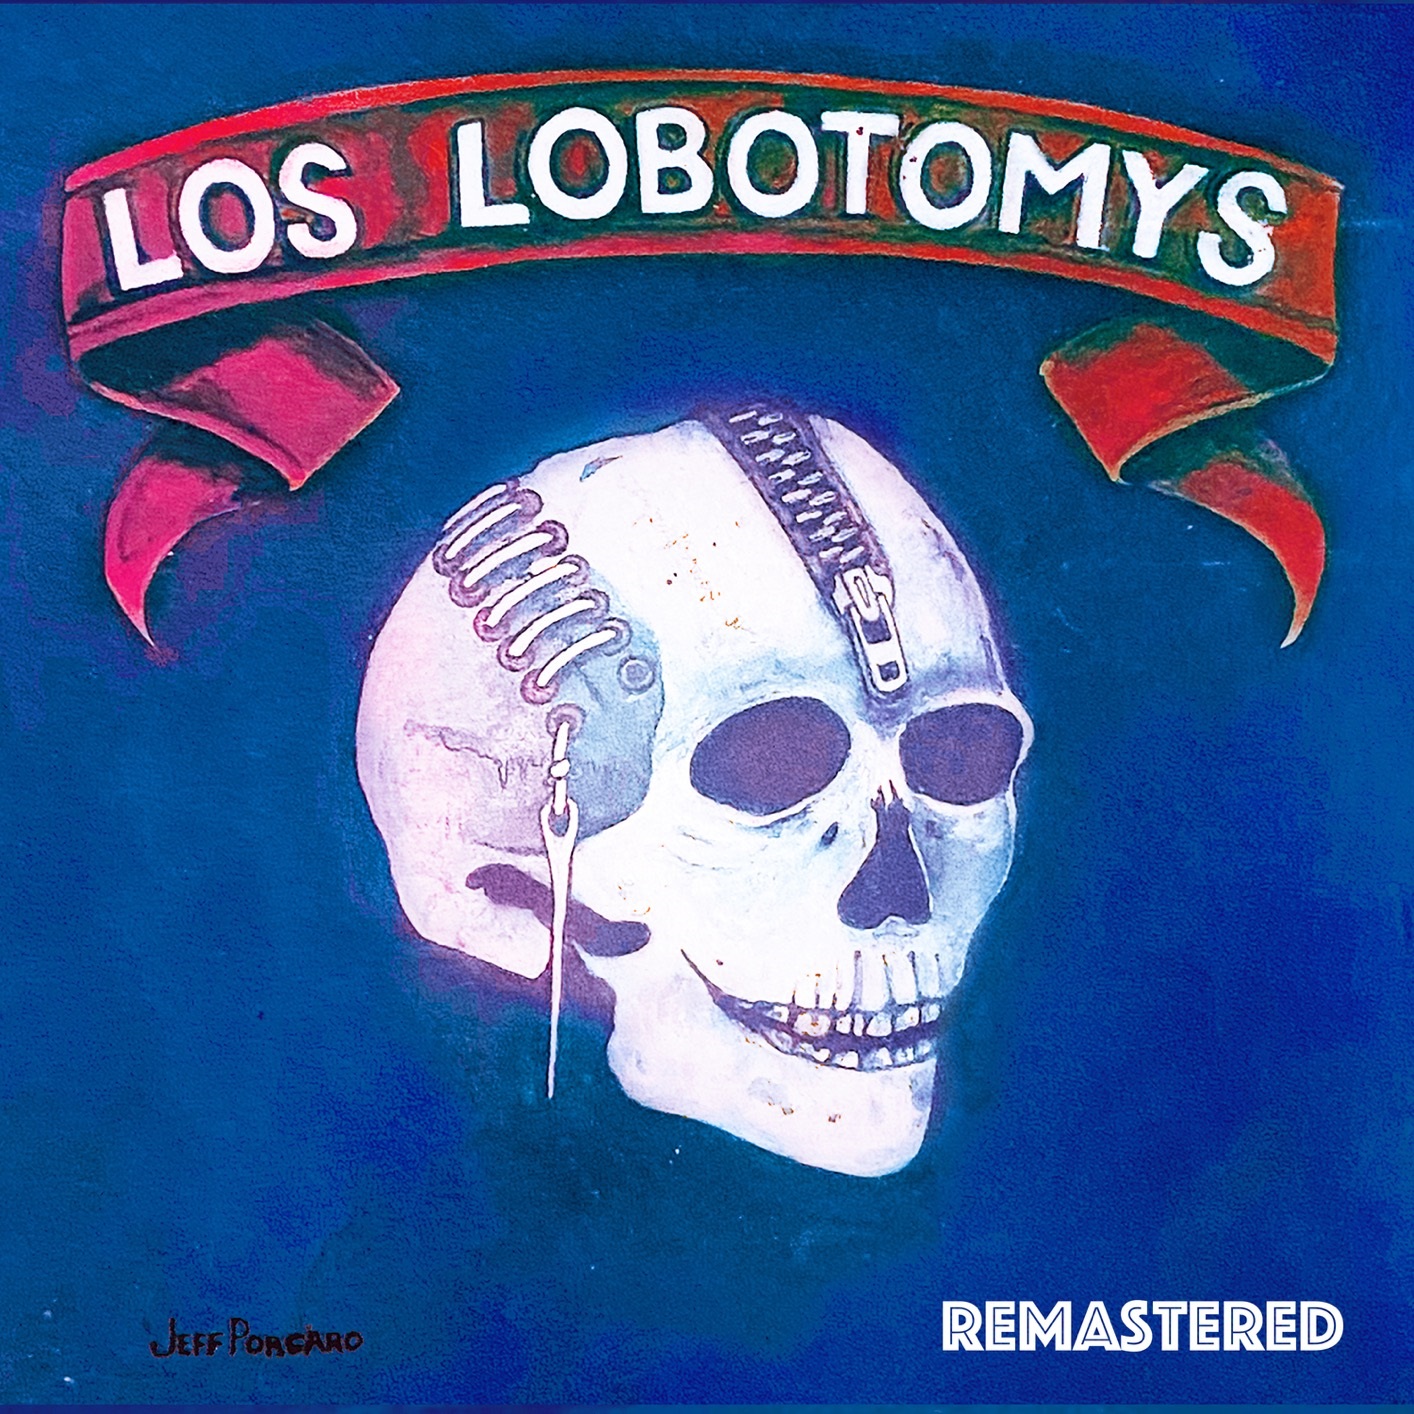 Los Lobotomys & David Garfield - Los Lobotomys (Remastered) (1989/2020) [FLAC 24bit/44,1kHz]